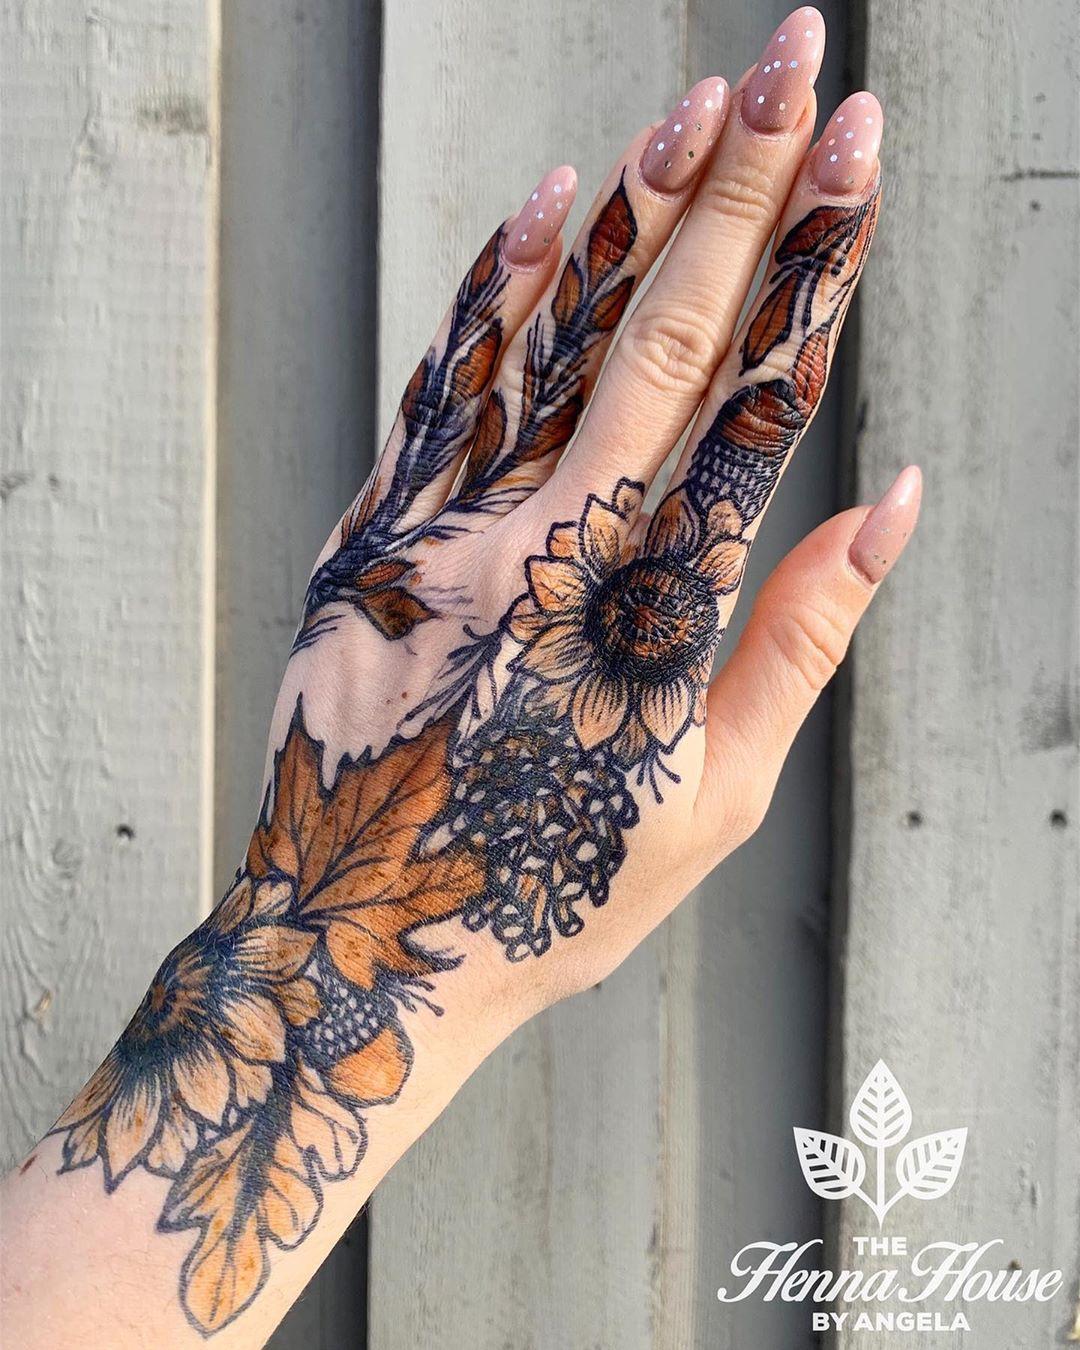 Simple Wrist Tattoo Type Mehndi Design For EID  Simple Wrist Mehndi Design  For EID 2020  Most Search Keywords On YouTube small henna wrist designs  simple wrist mehndi design wrist tattoo